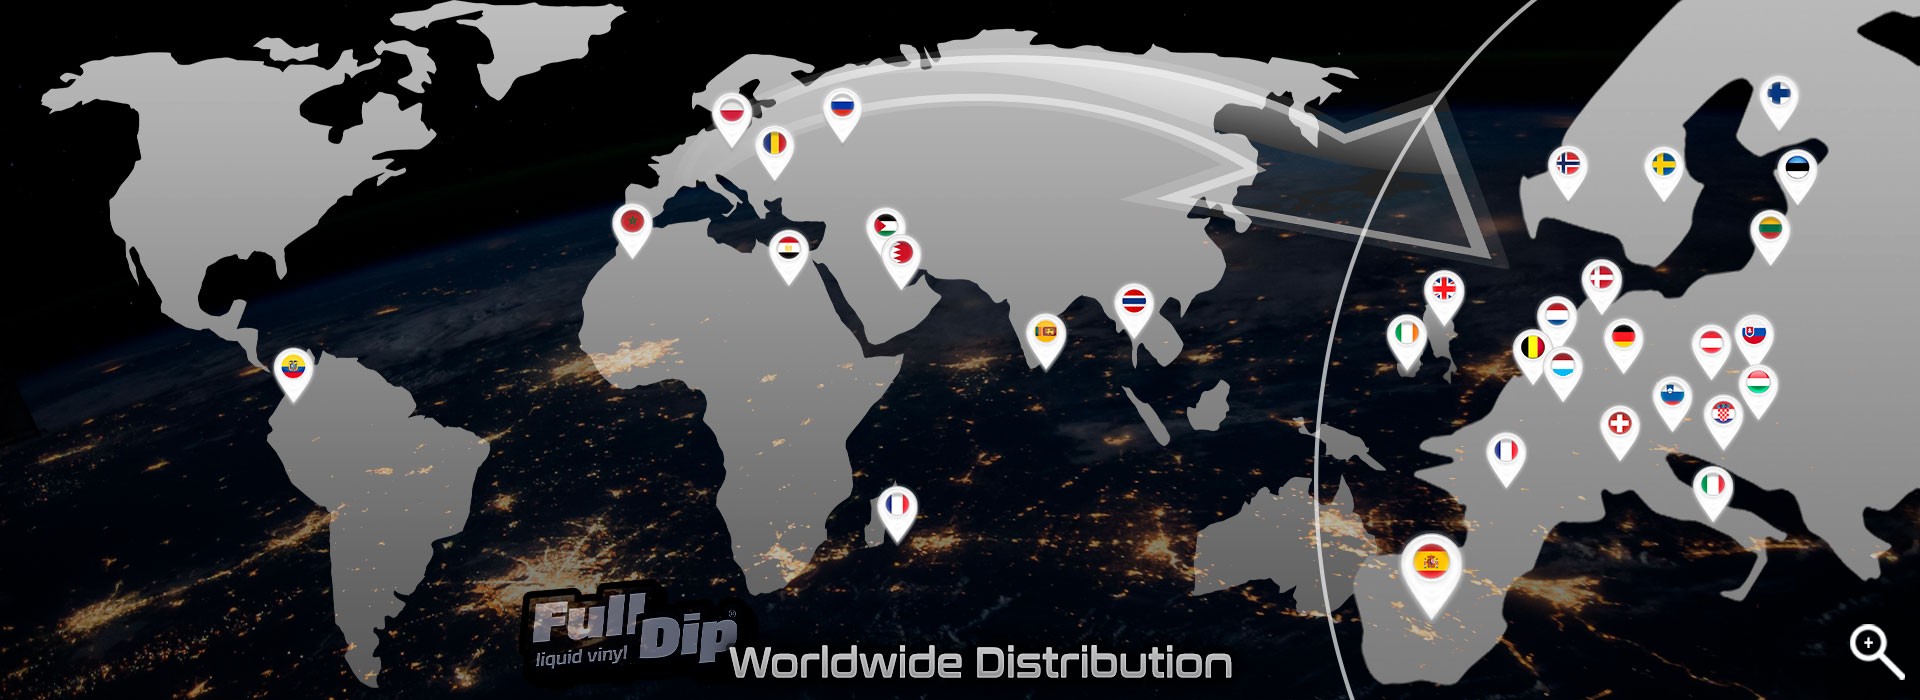 WORLDWIDE Distribution